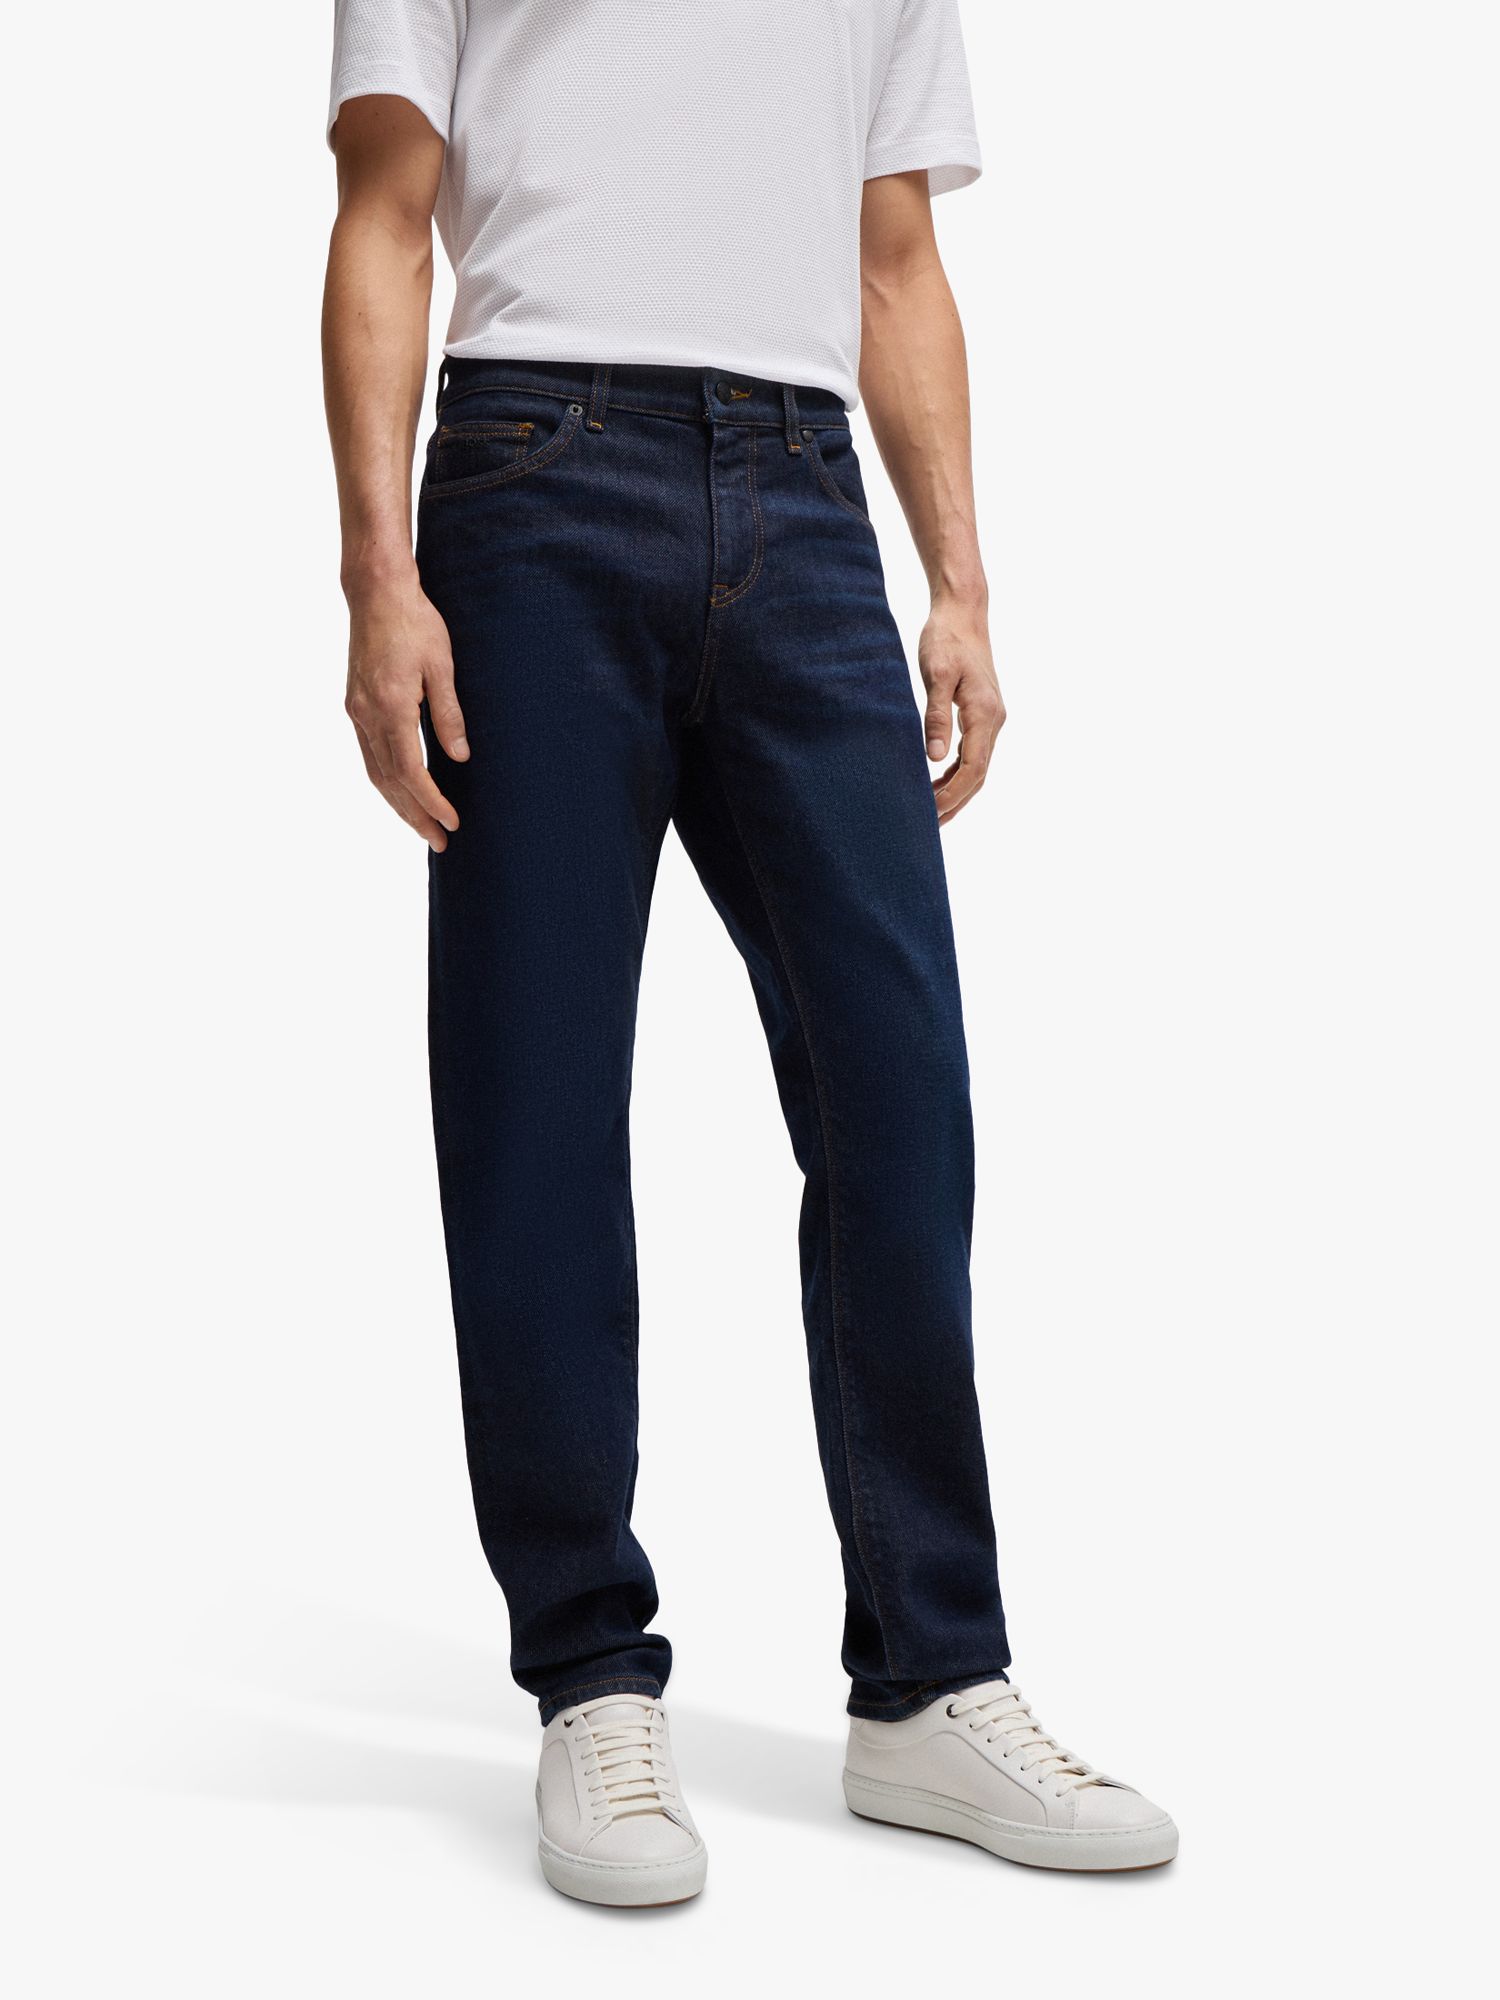 HUGO BOSS Maine Straight Cut Jeans, Medium Blue, 33R